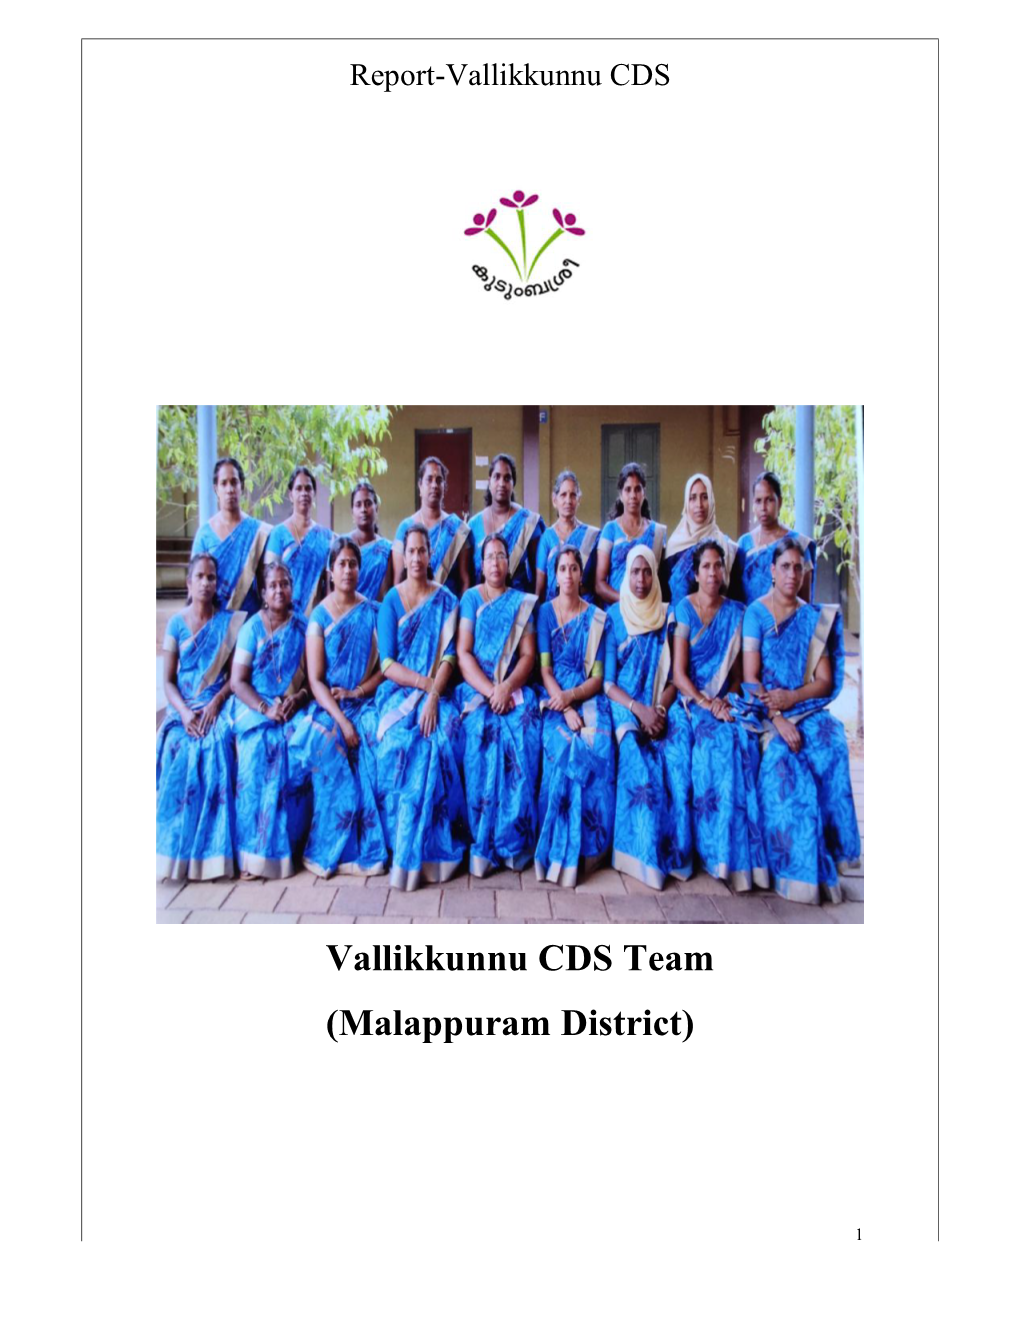 Vallikkunnu CDS Team (Malappuram District)